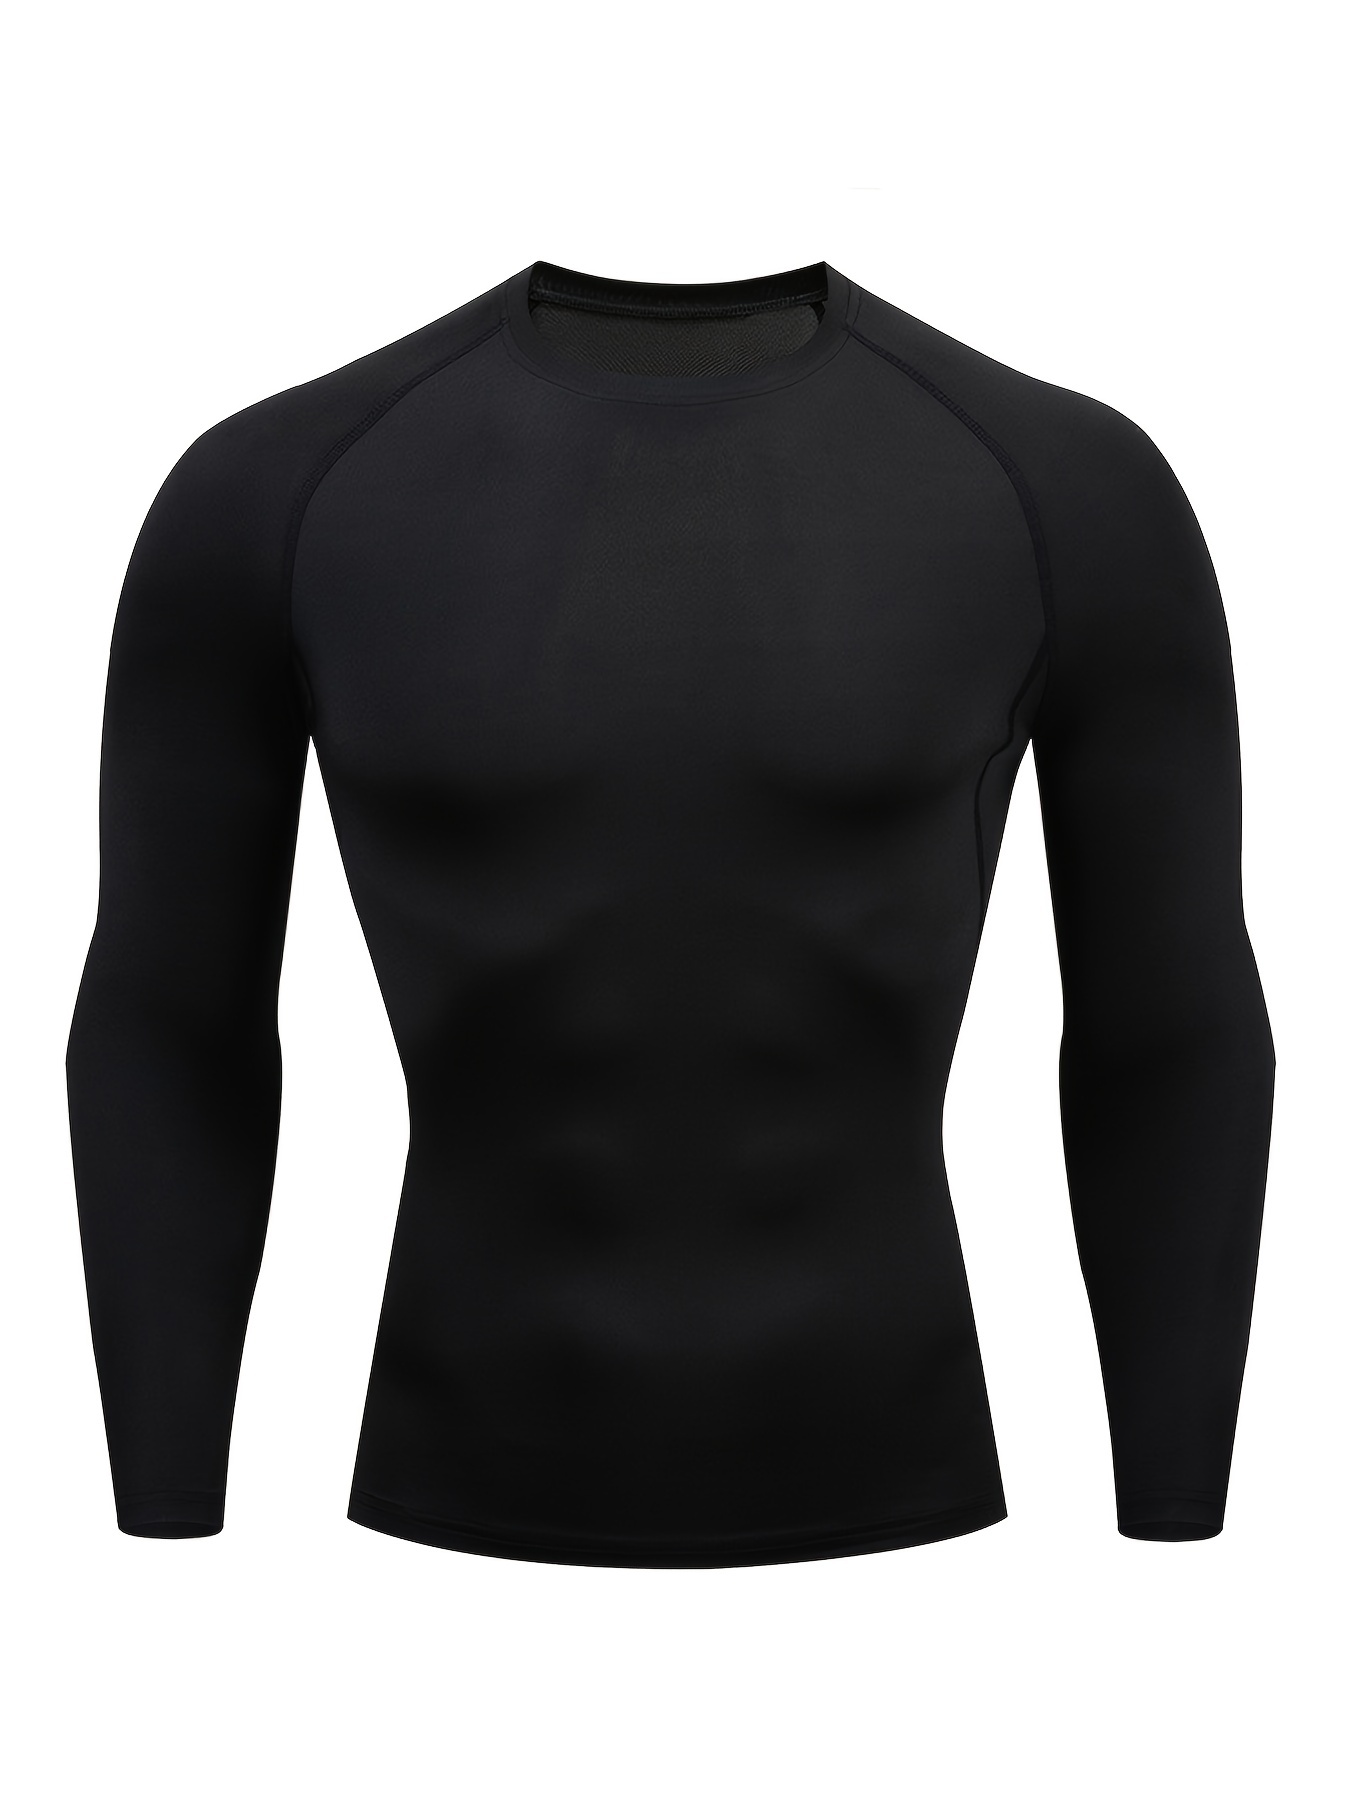 McDavid Performance Compression Shirt, Black, Shirts -  Canada